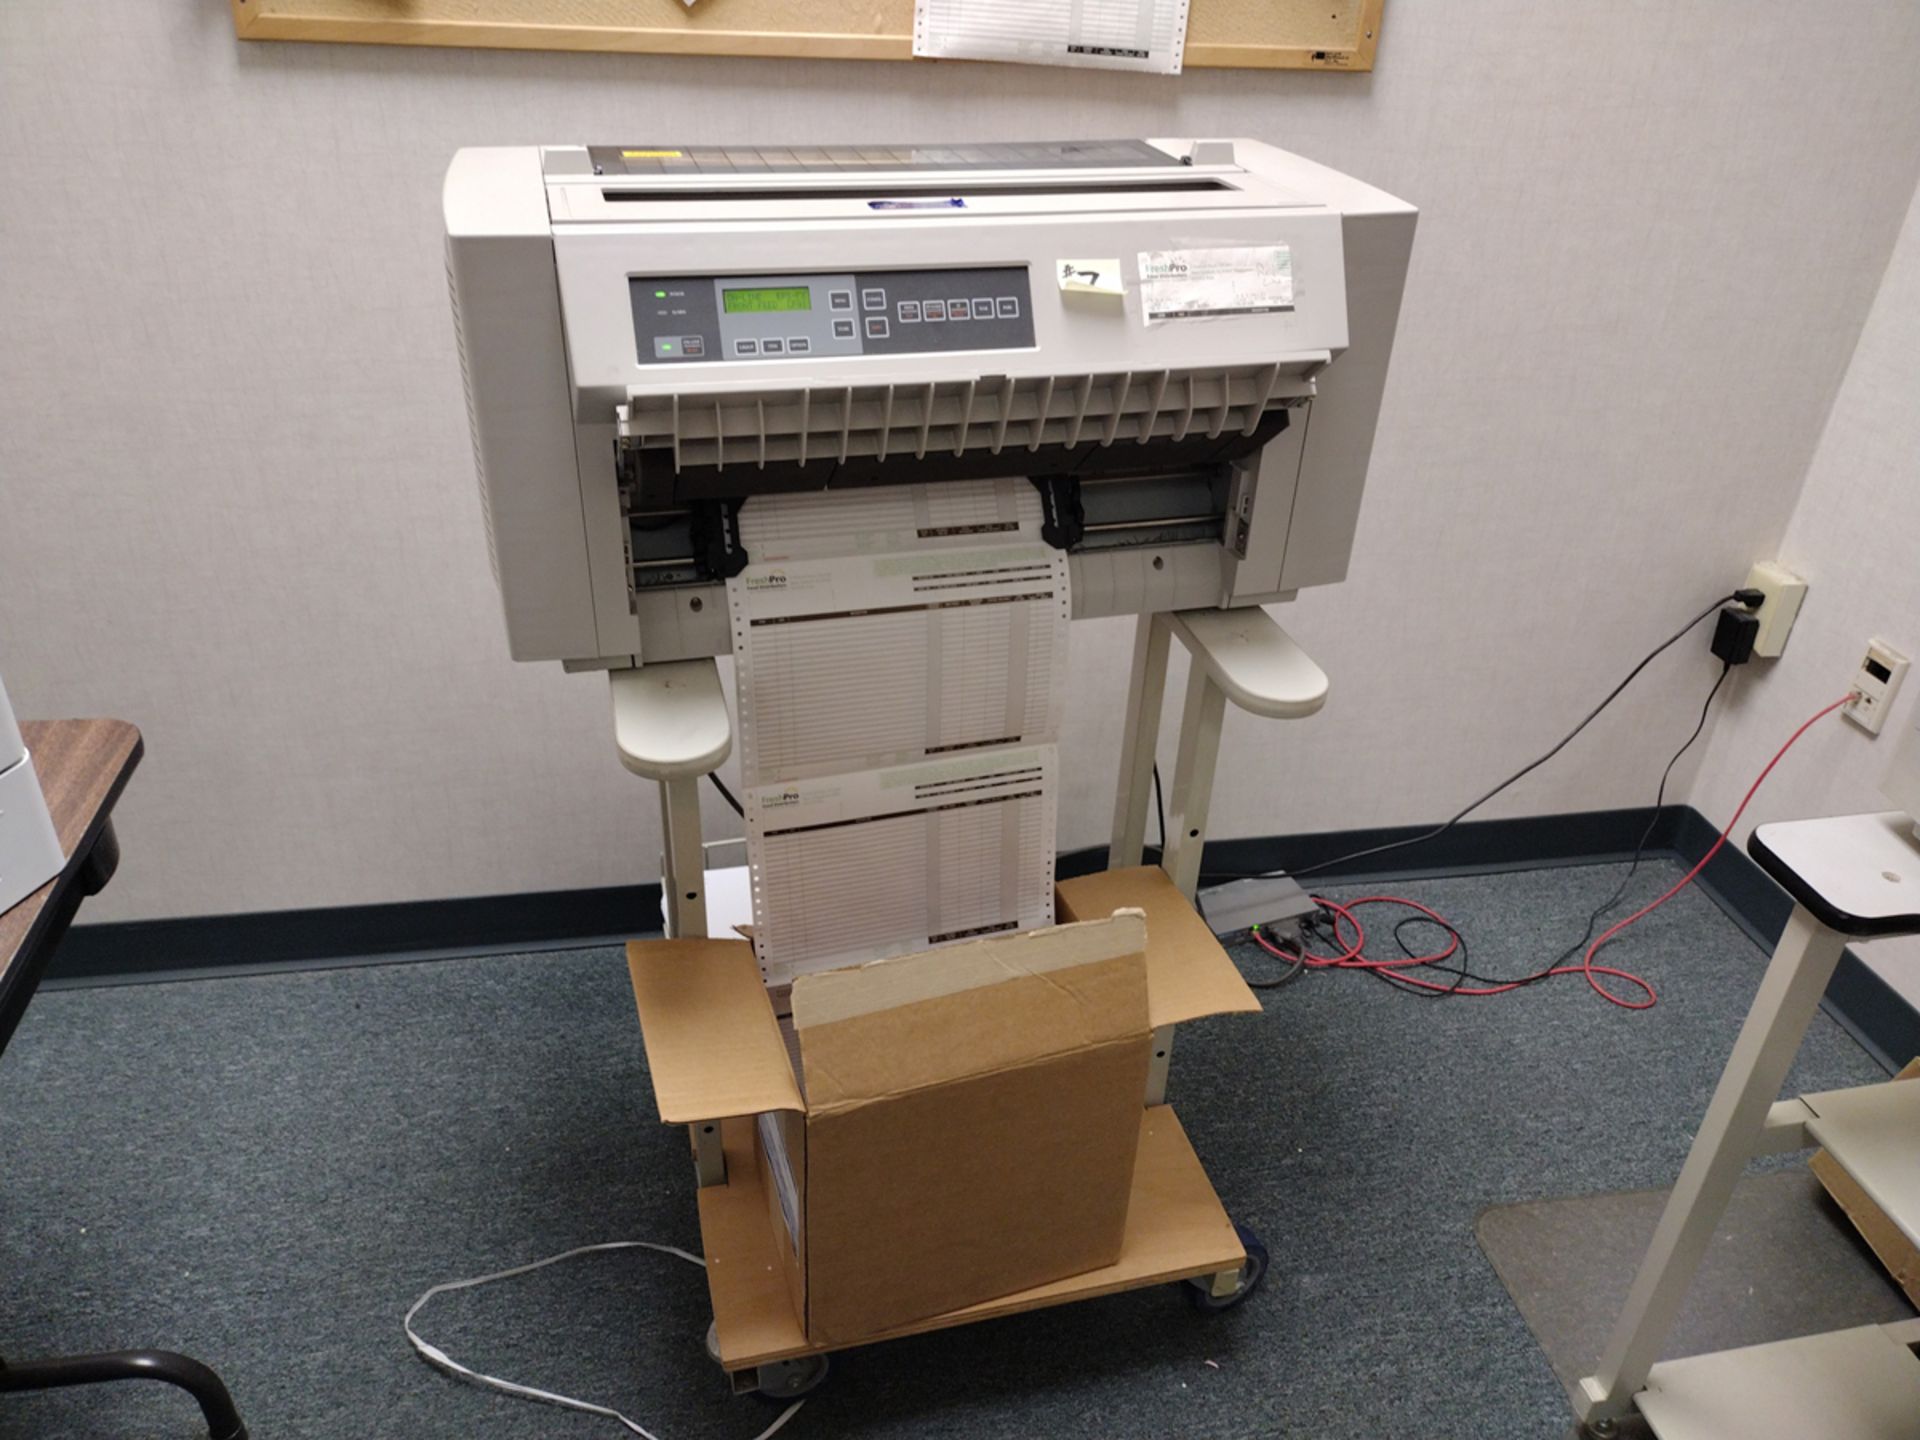 OKI Pacemark 4410 Dot Matrix Printer w/ Rolling Table